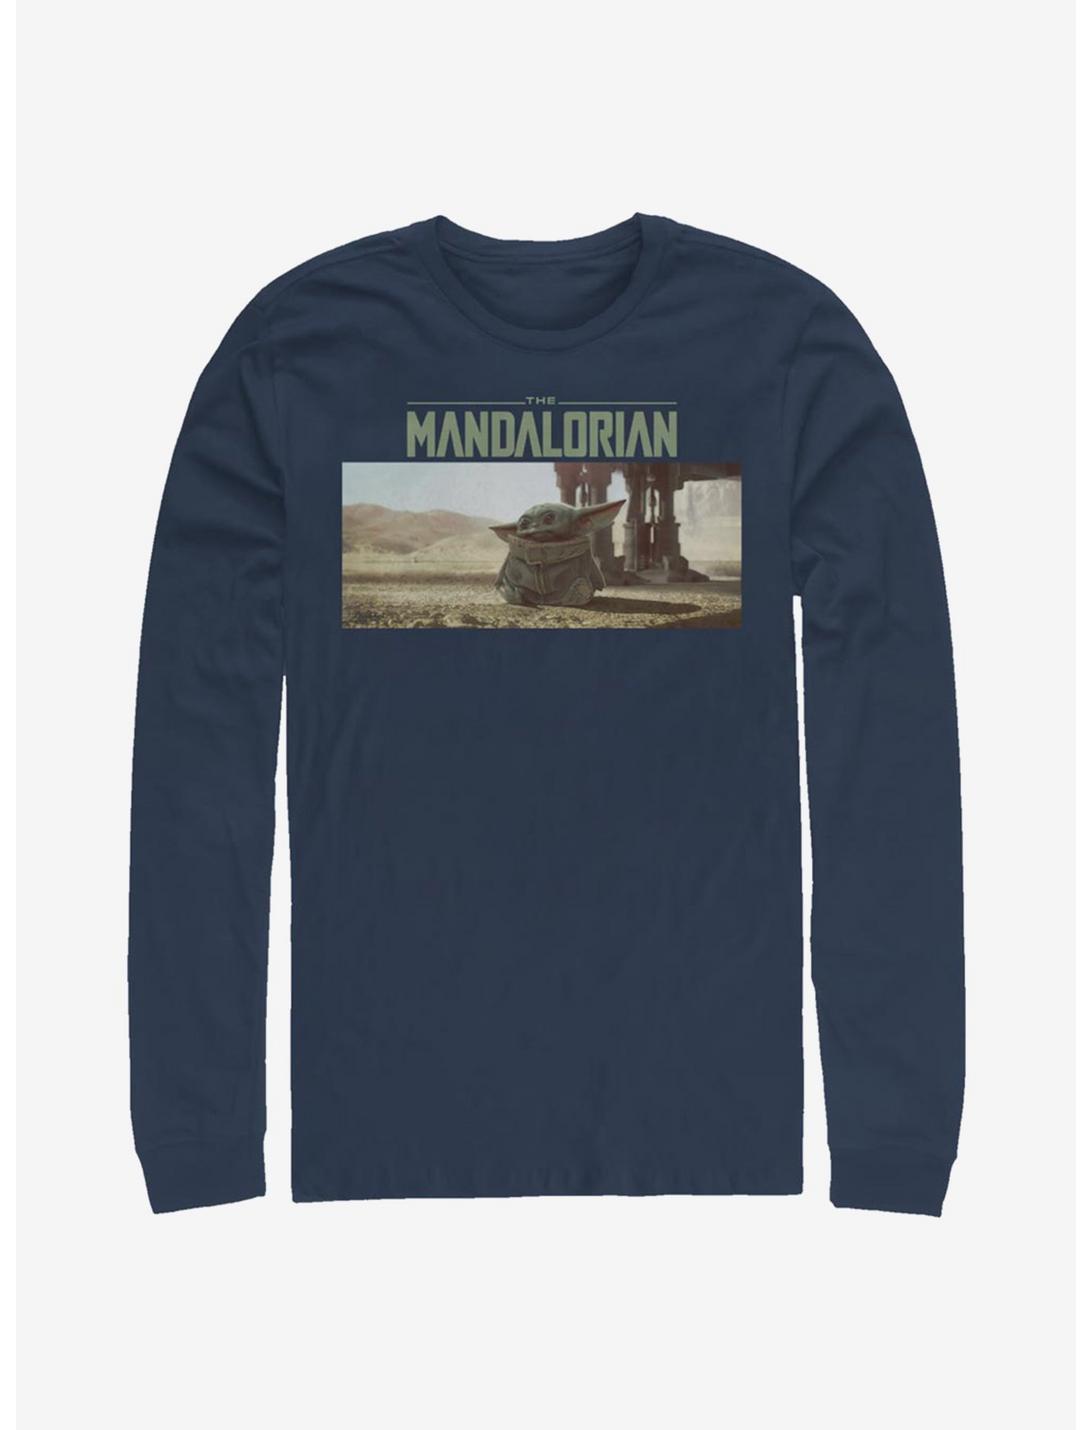 Star Wars The Mandalorian Still Looking Long-Sleeve T-Shirt, NAVY, hi-res